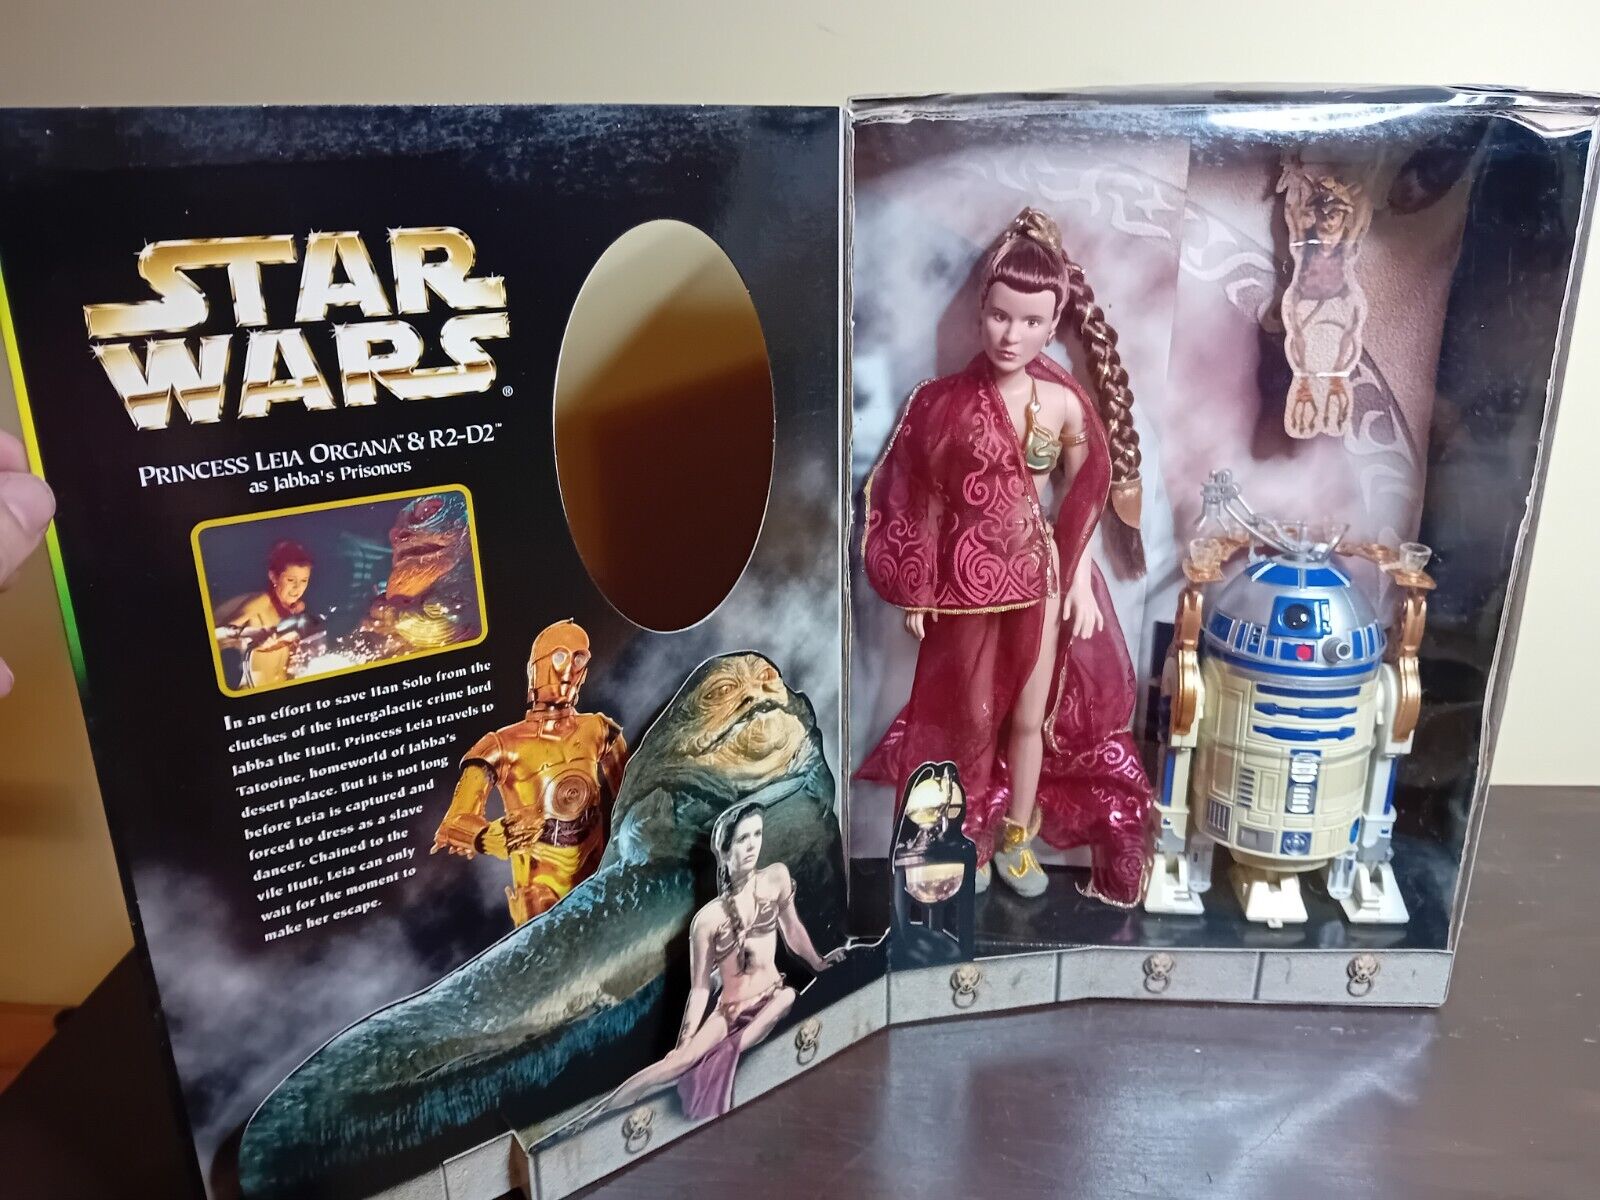 Star Wars Princess Leia Organa & R2-D2 Jabbas Prisoners 1998 Limited Edition